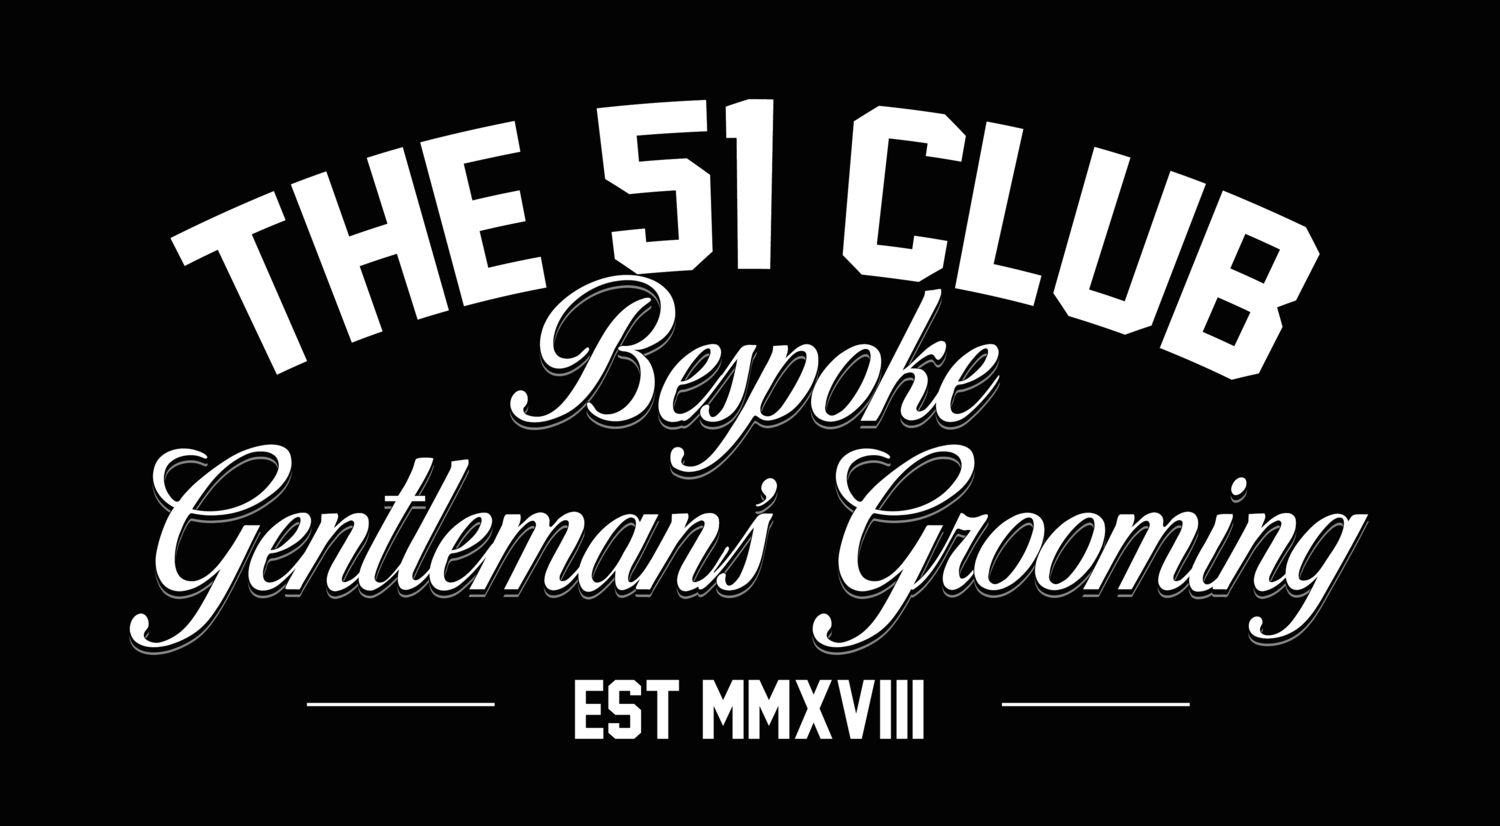 THE 51 CLUB